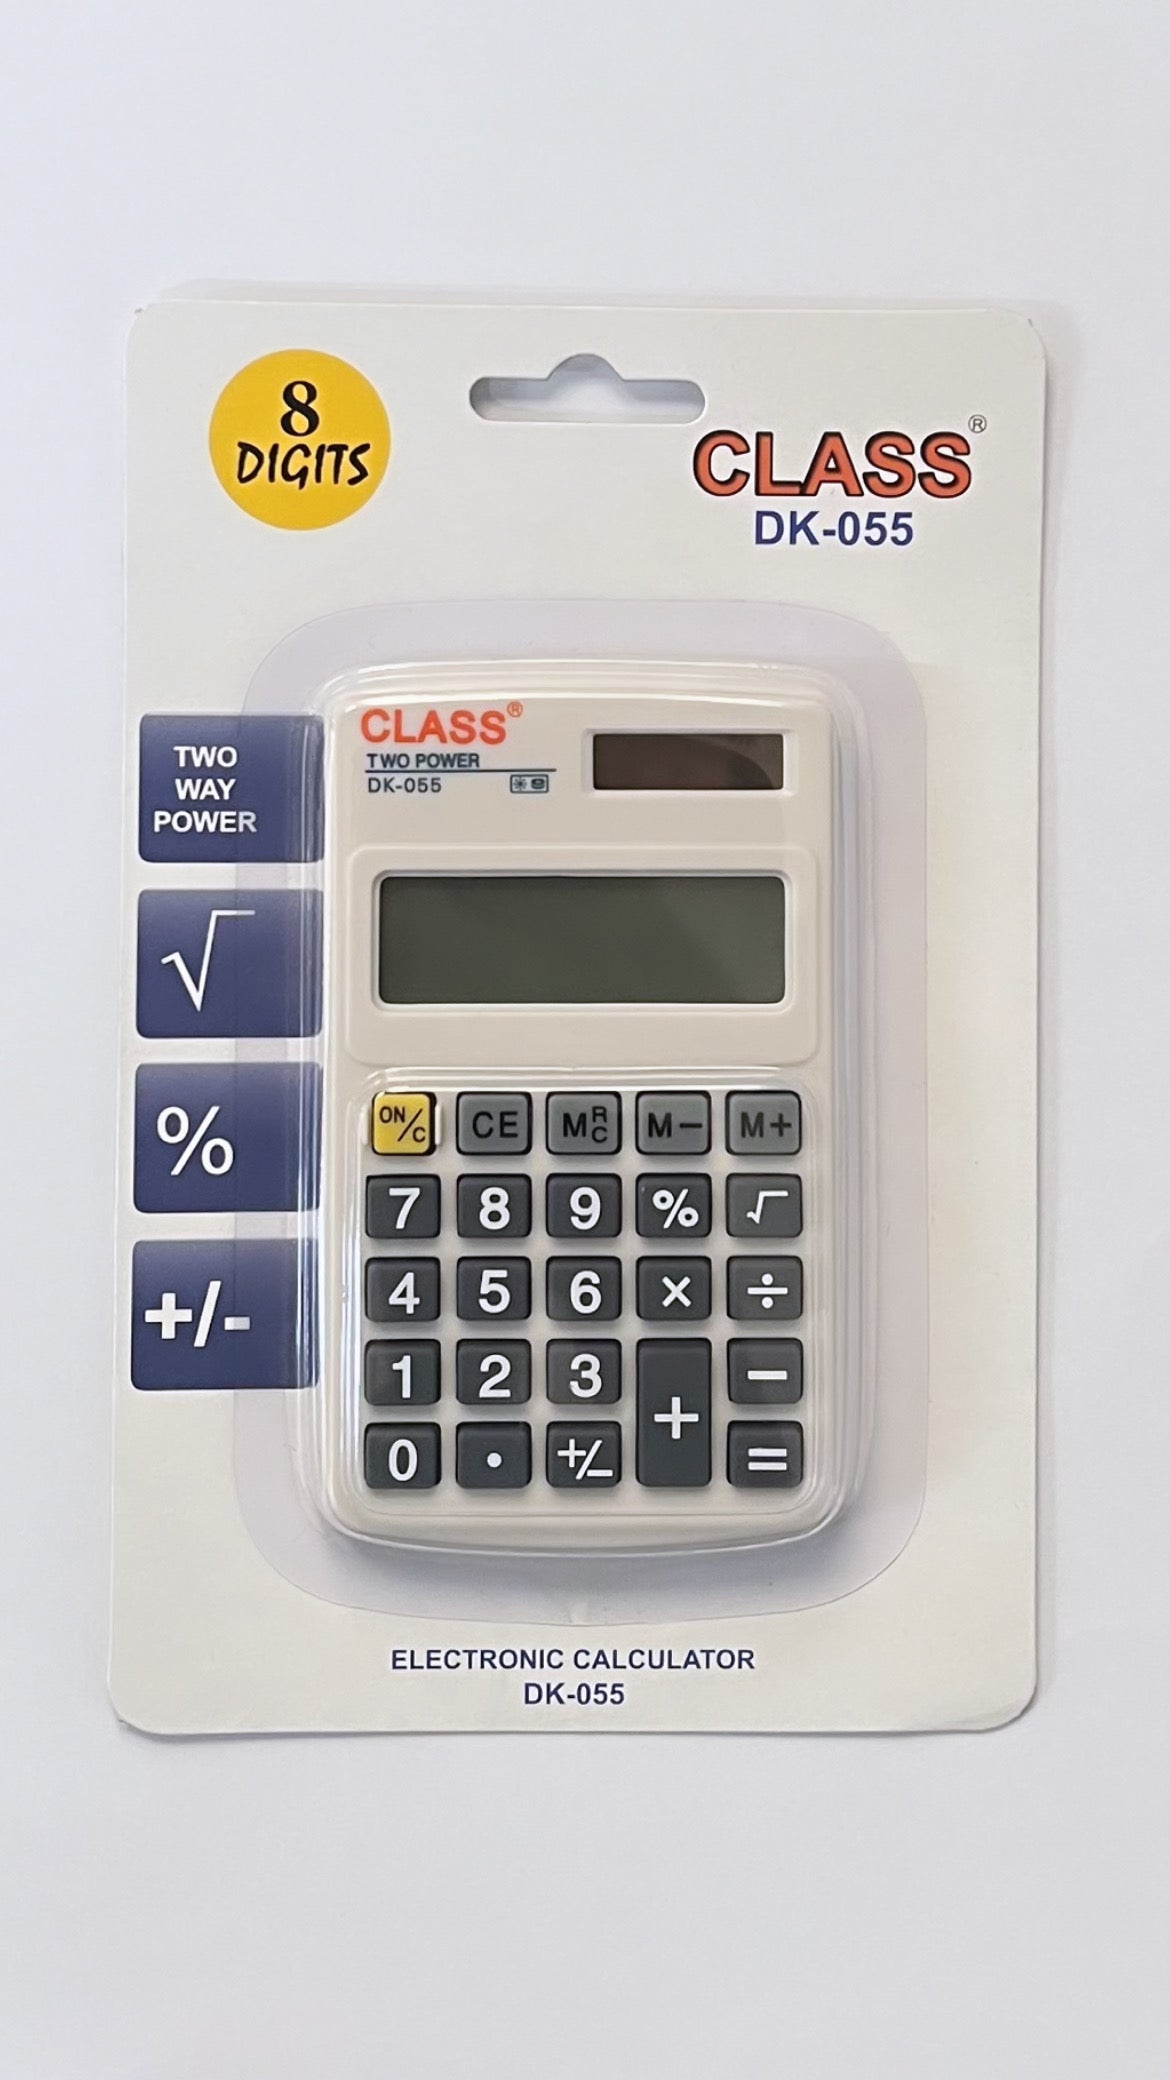 CLASS ELECTRONIC CALCULATOR DK-055